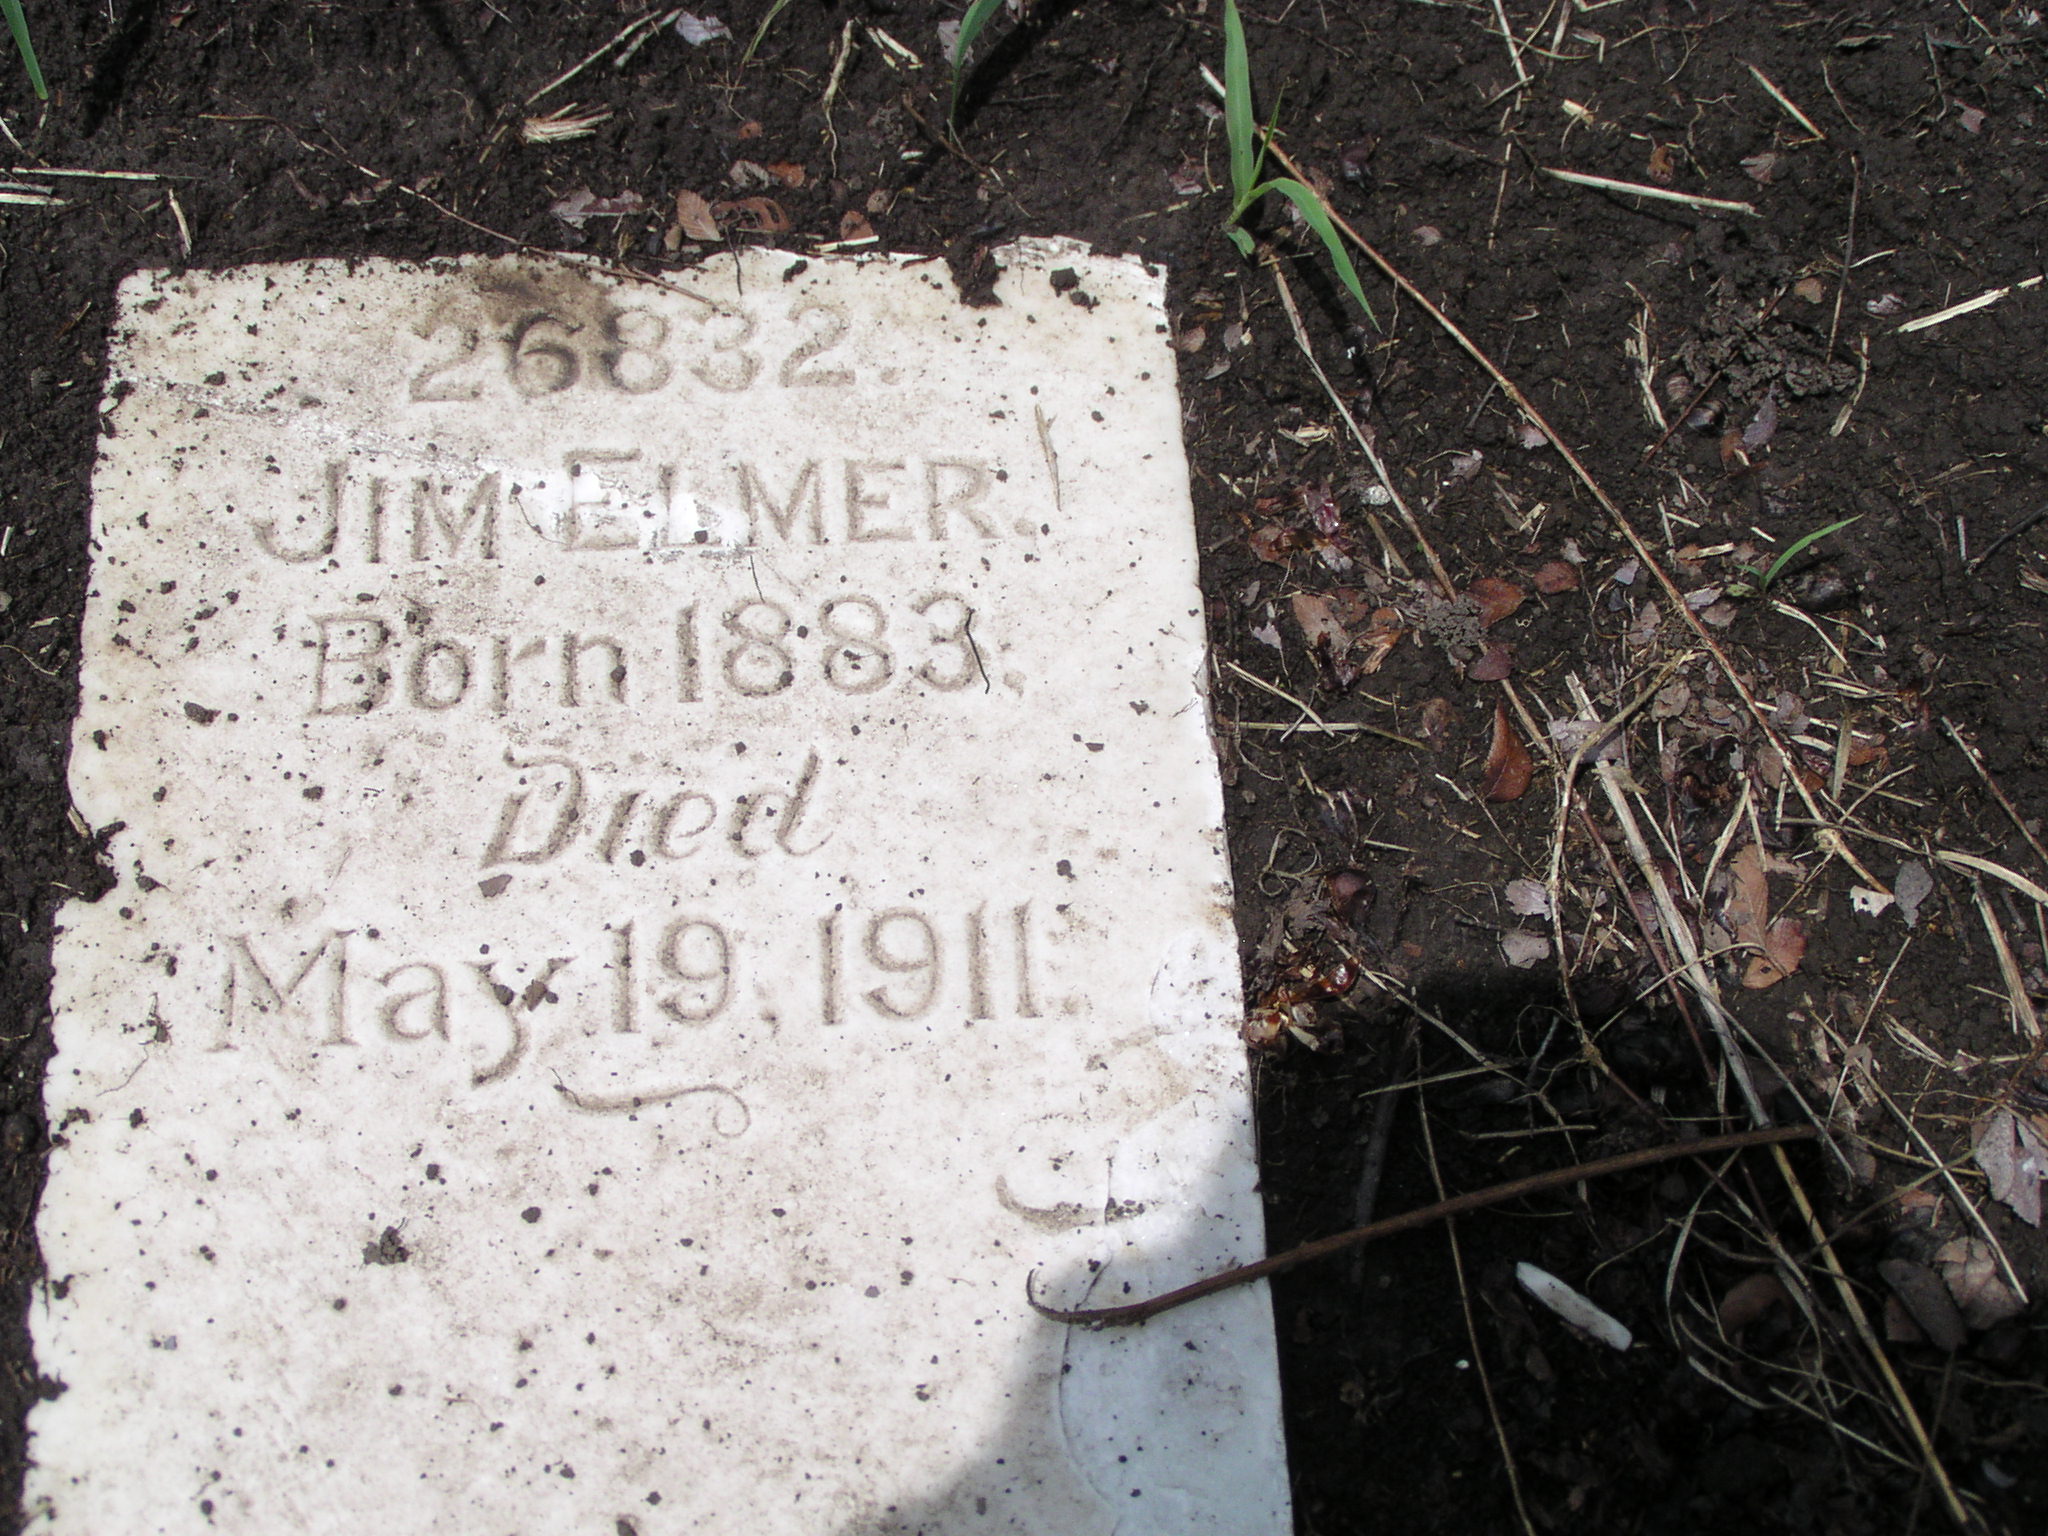 Jim Elmer, Texas convict # 26832